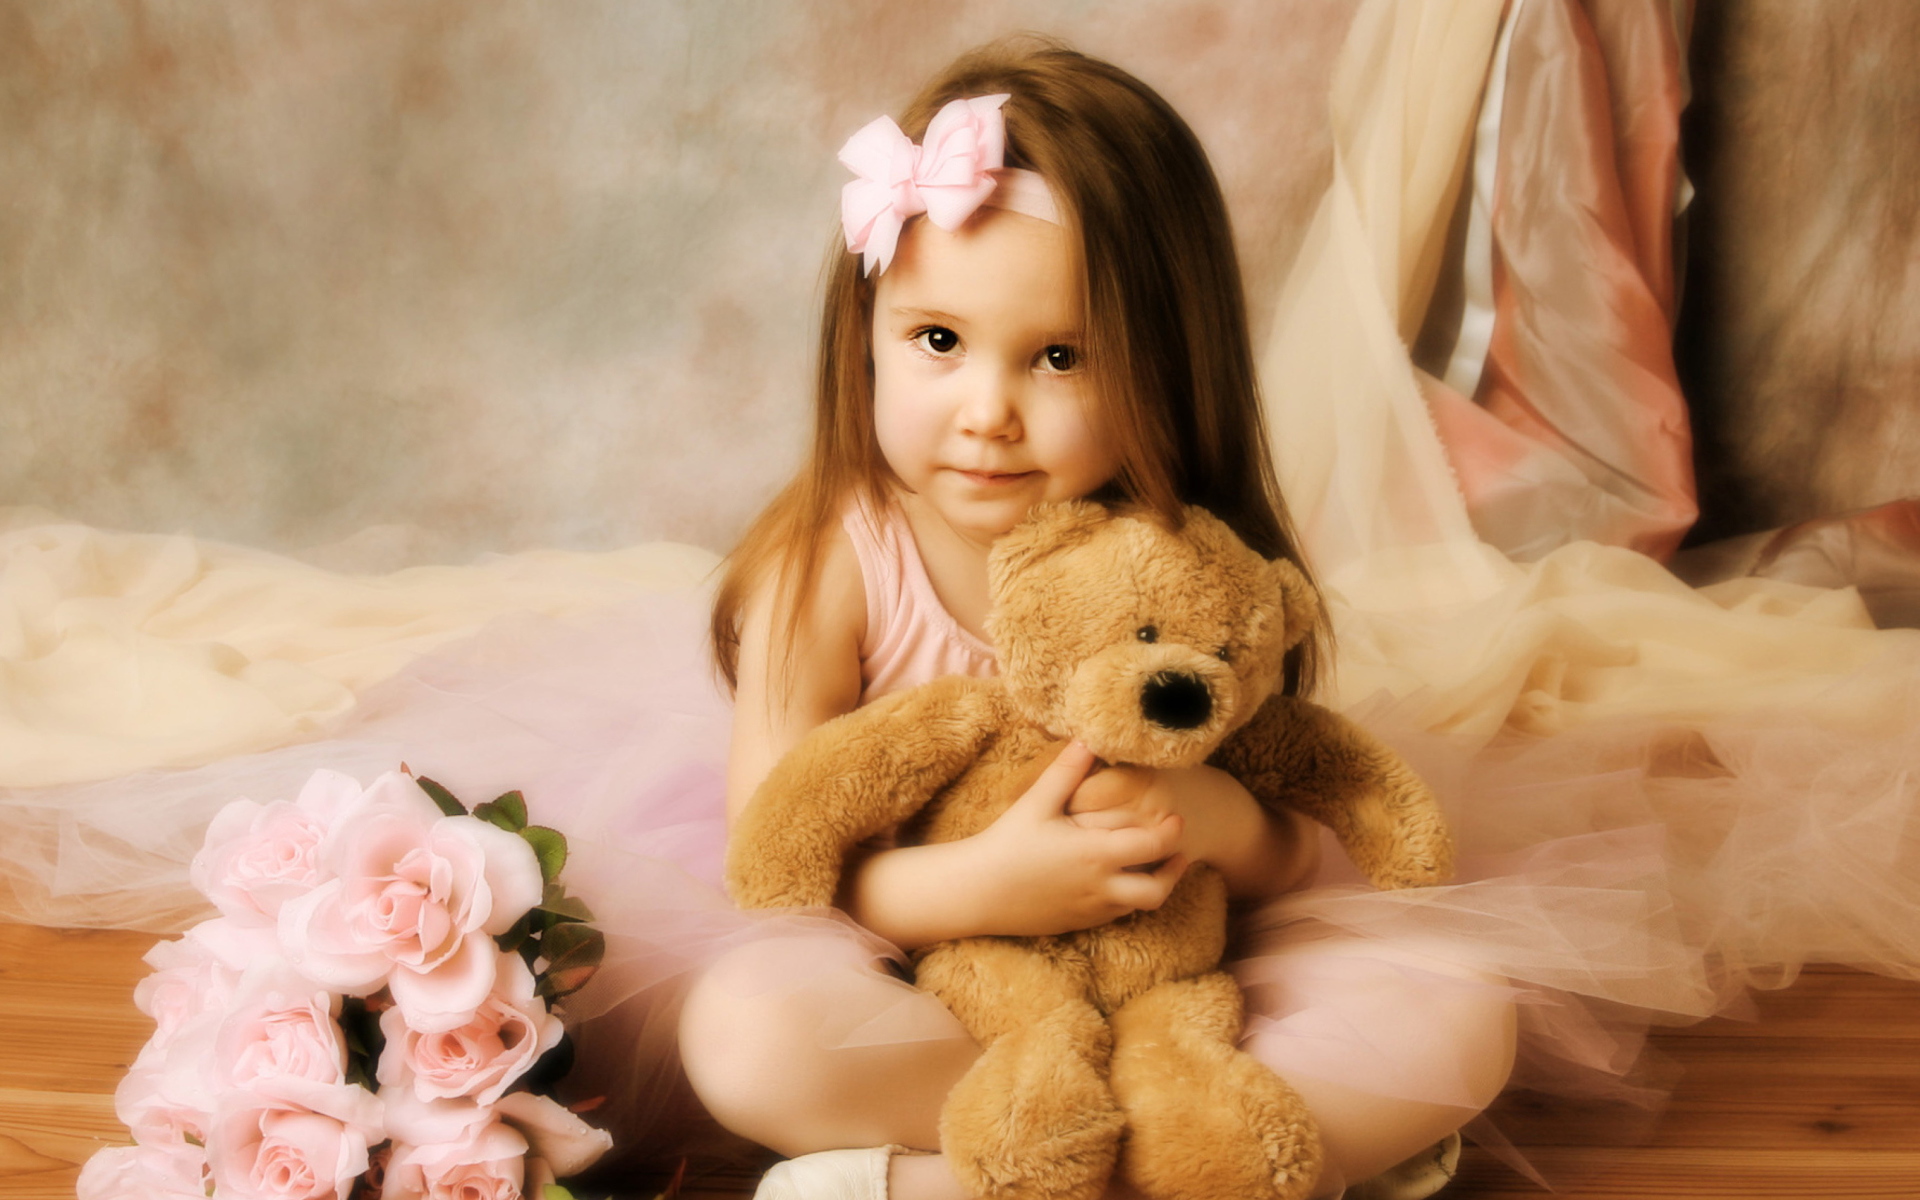 Cute Little Girl With Teddy Bear wallpaper 1920x1200